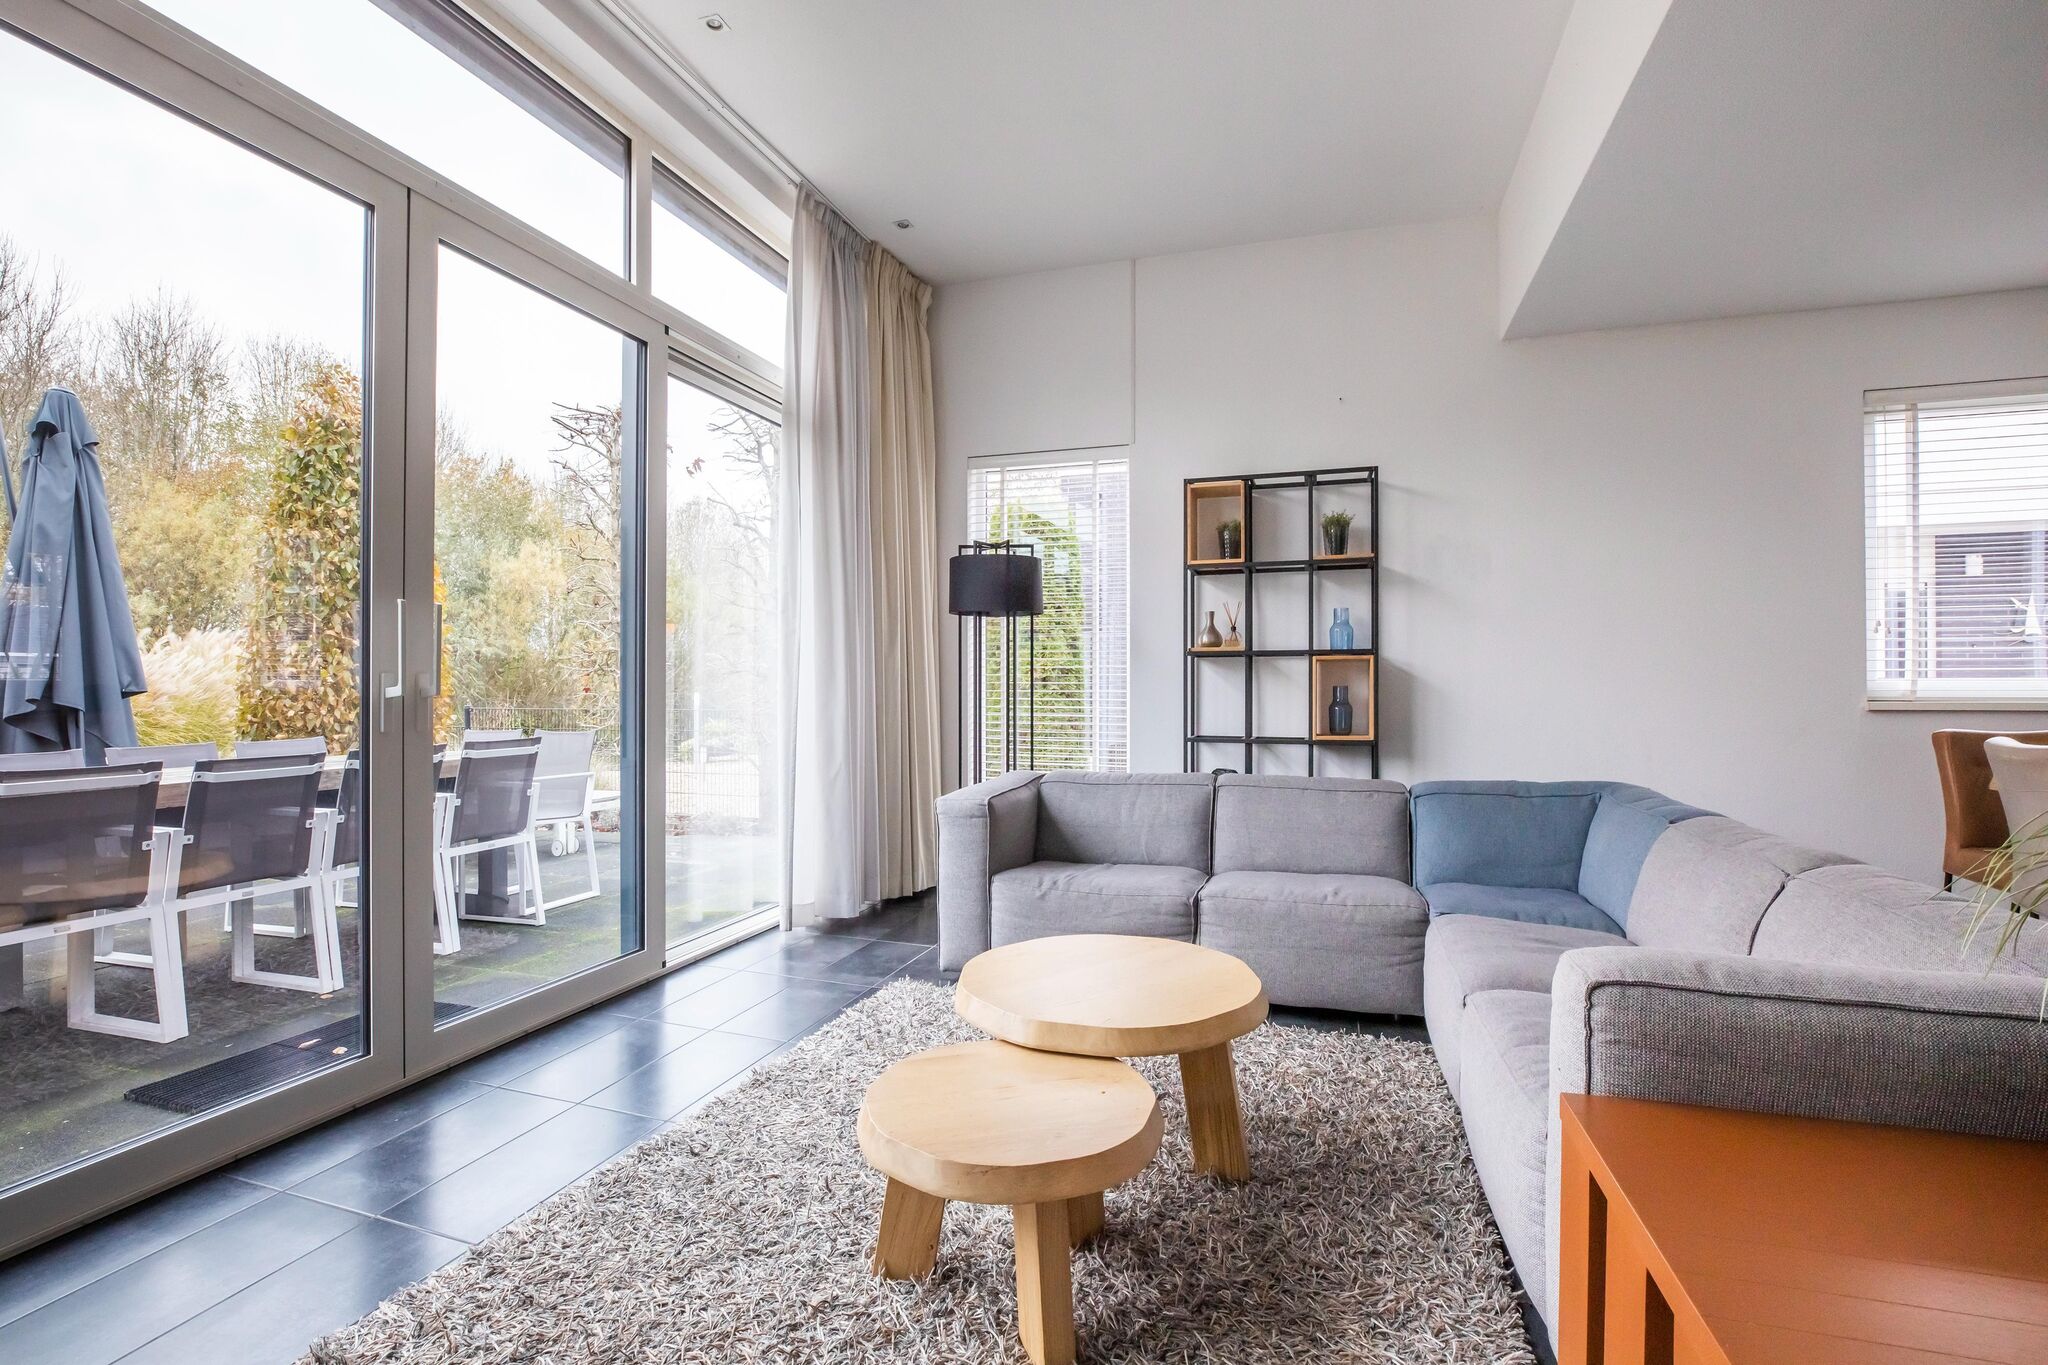 Modern Villa in Harderwijk with bubble bath